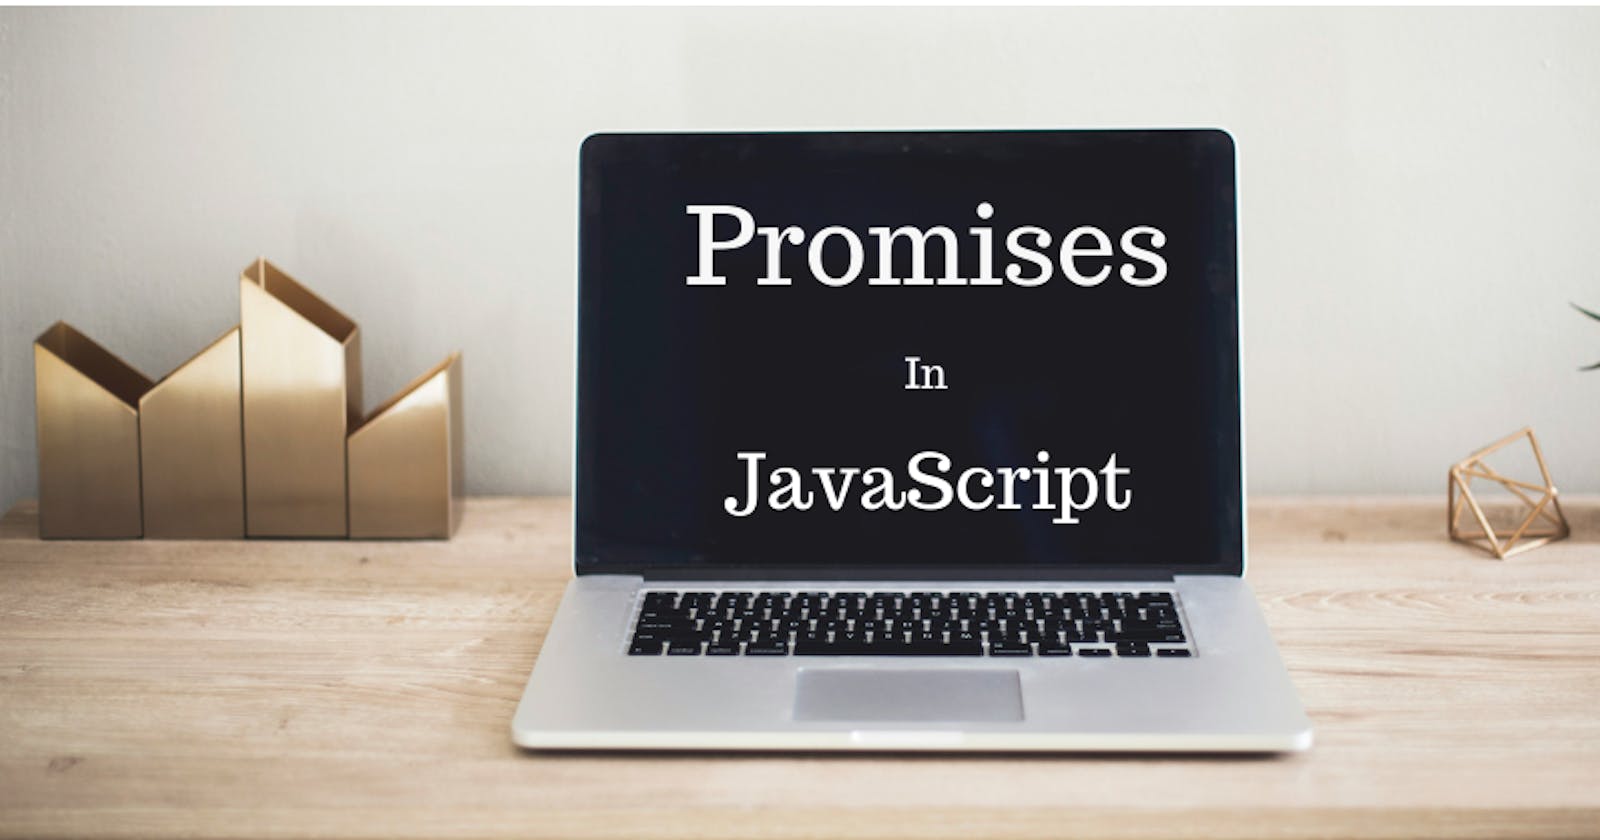 What's Promises in JavaScript?